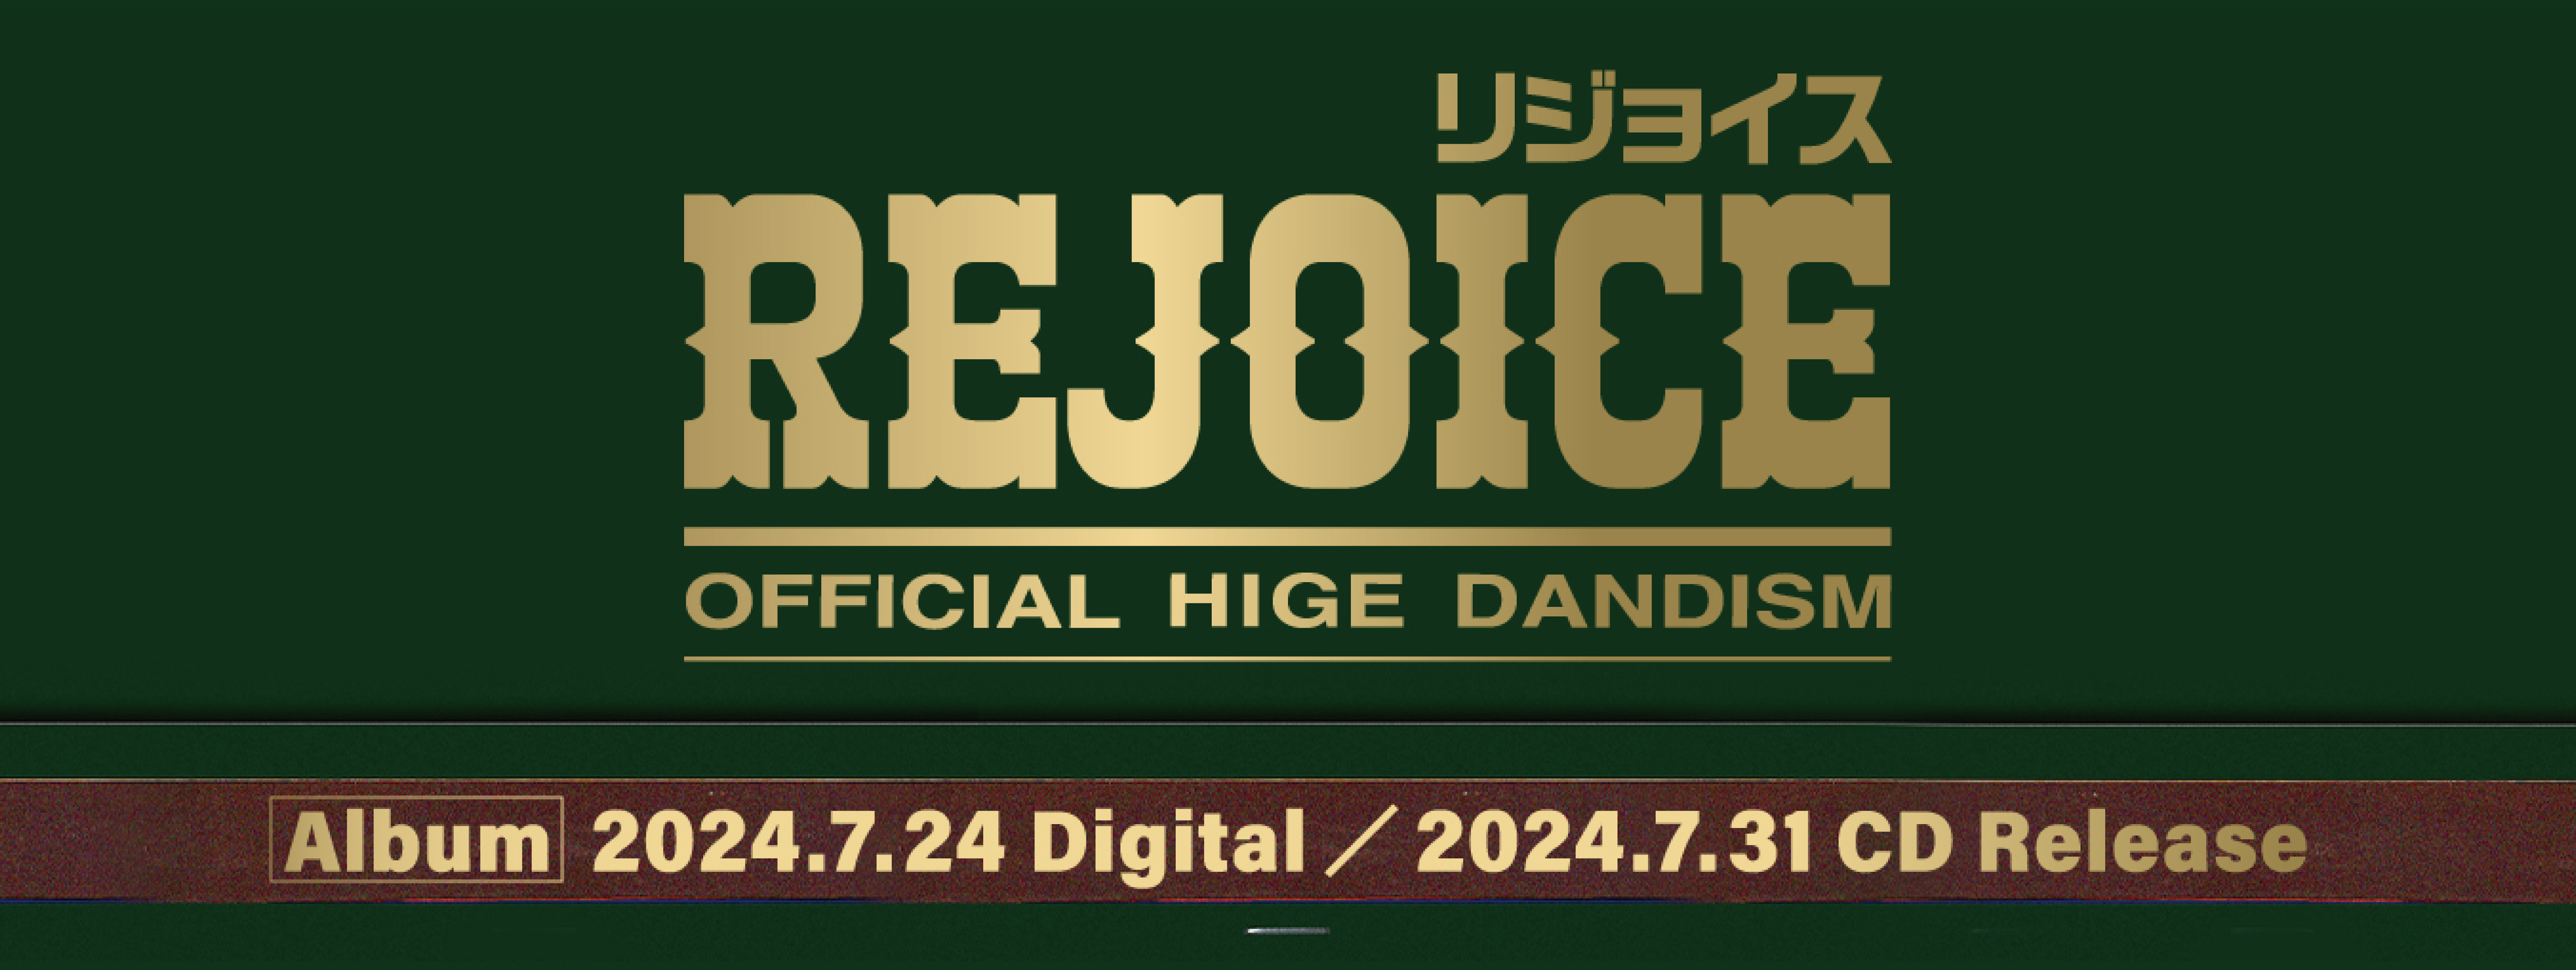 New Album「Rejoice」